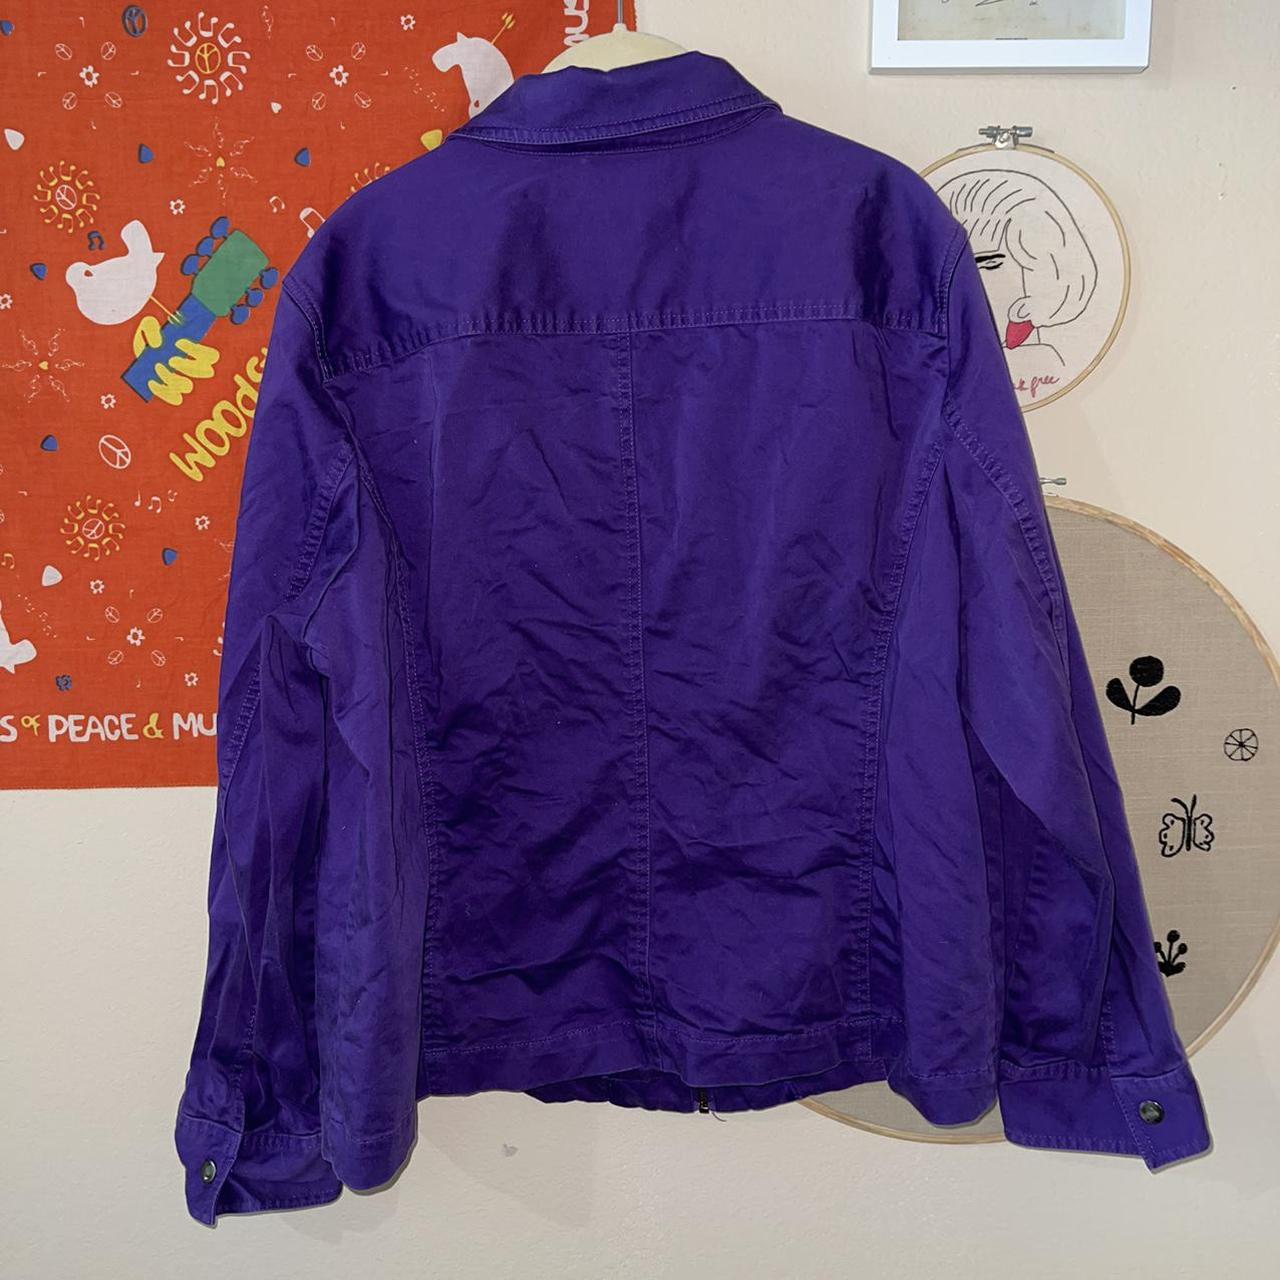 Product Image 4 - Jones New York purple jacket.